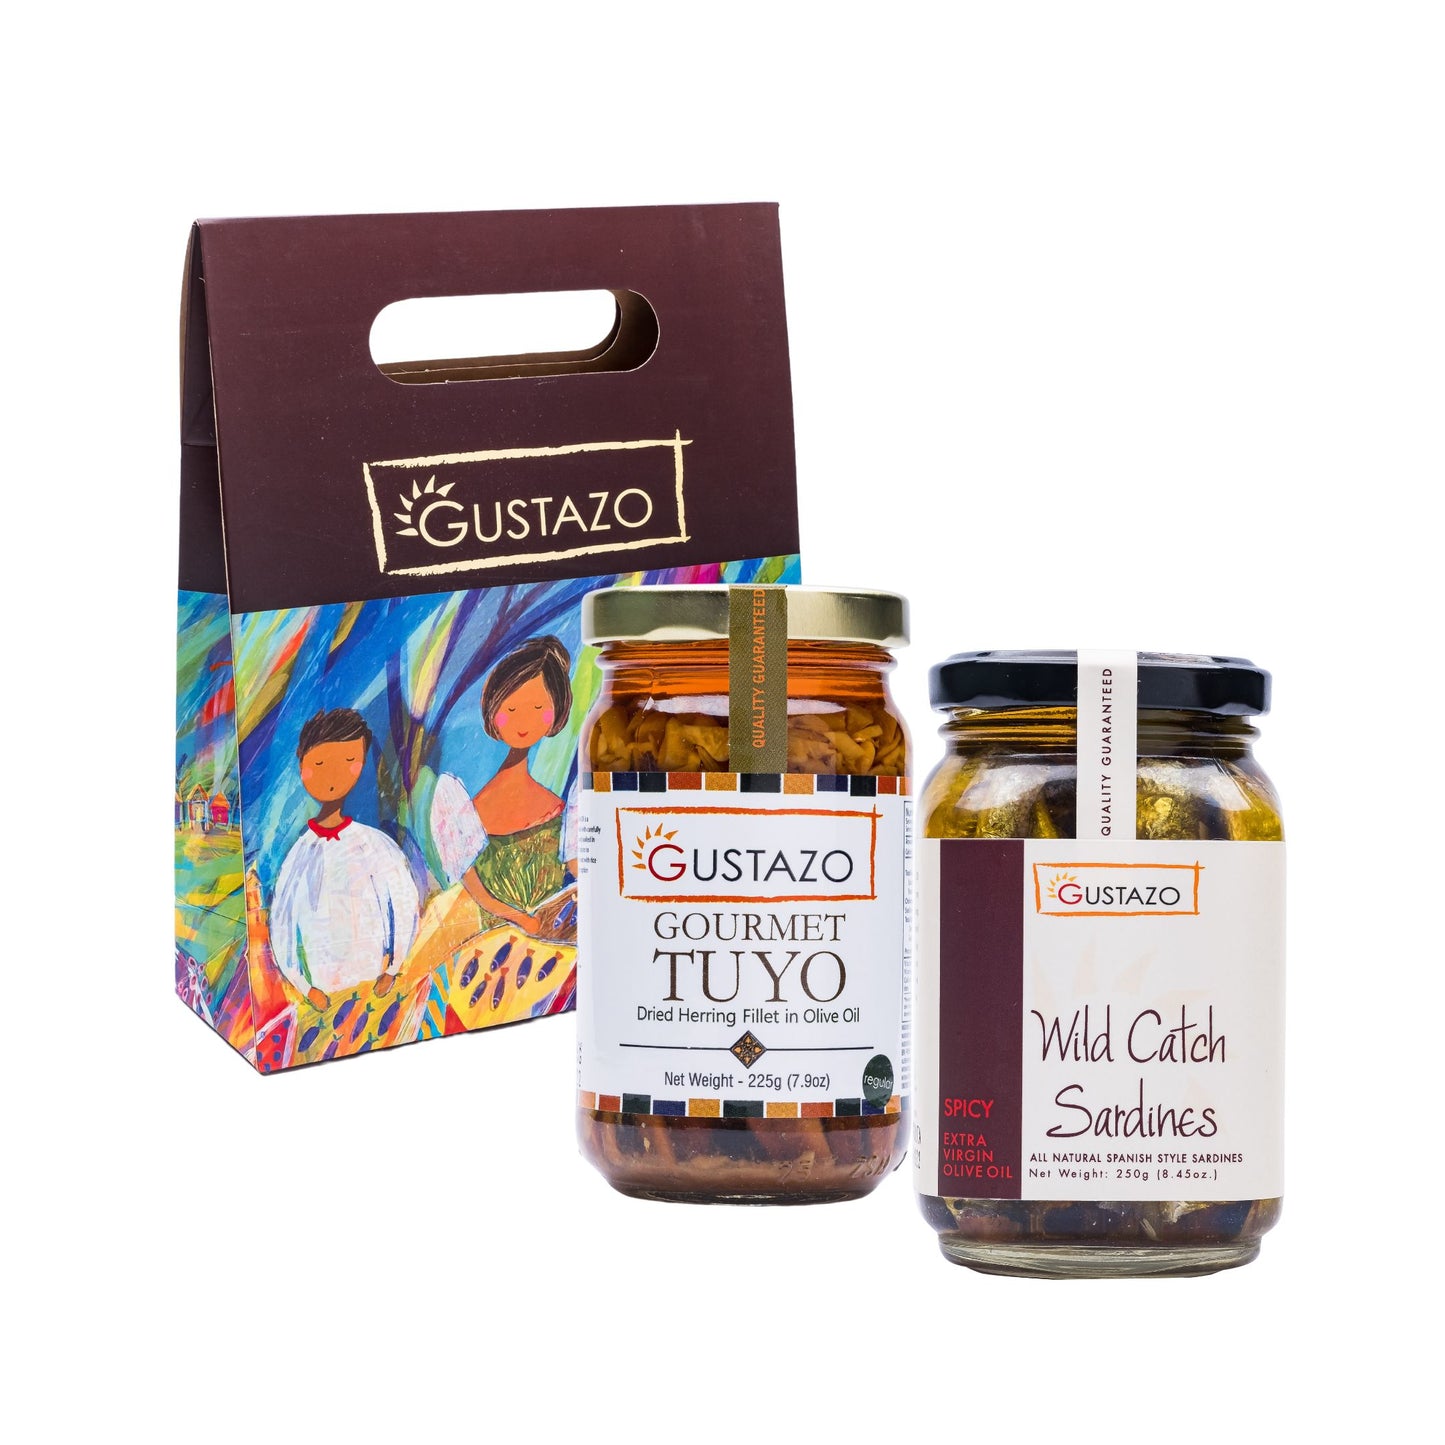 Gourmet Tuyo in Olive Oil & Wild Catch Sardines Spicy EVOO in Duo Box